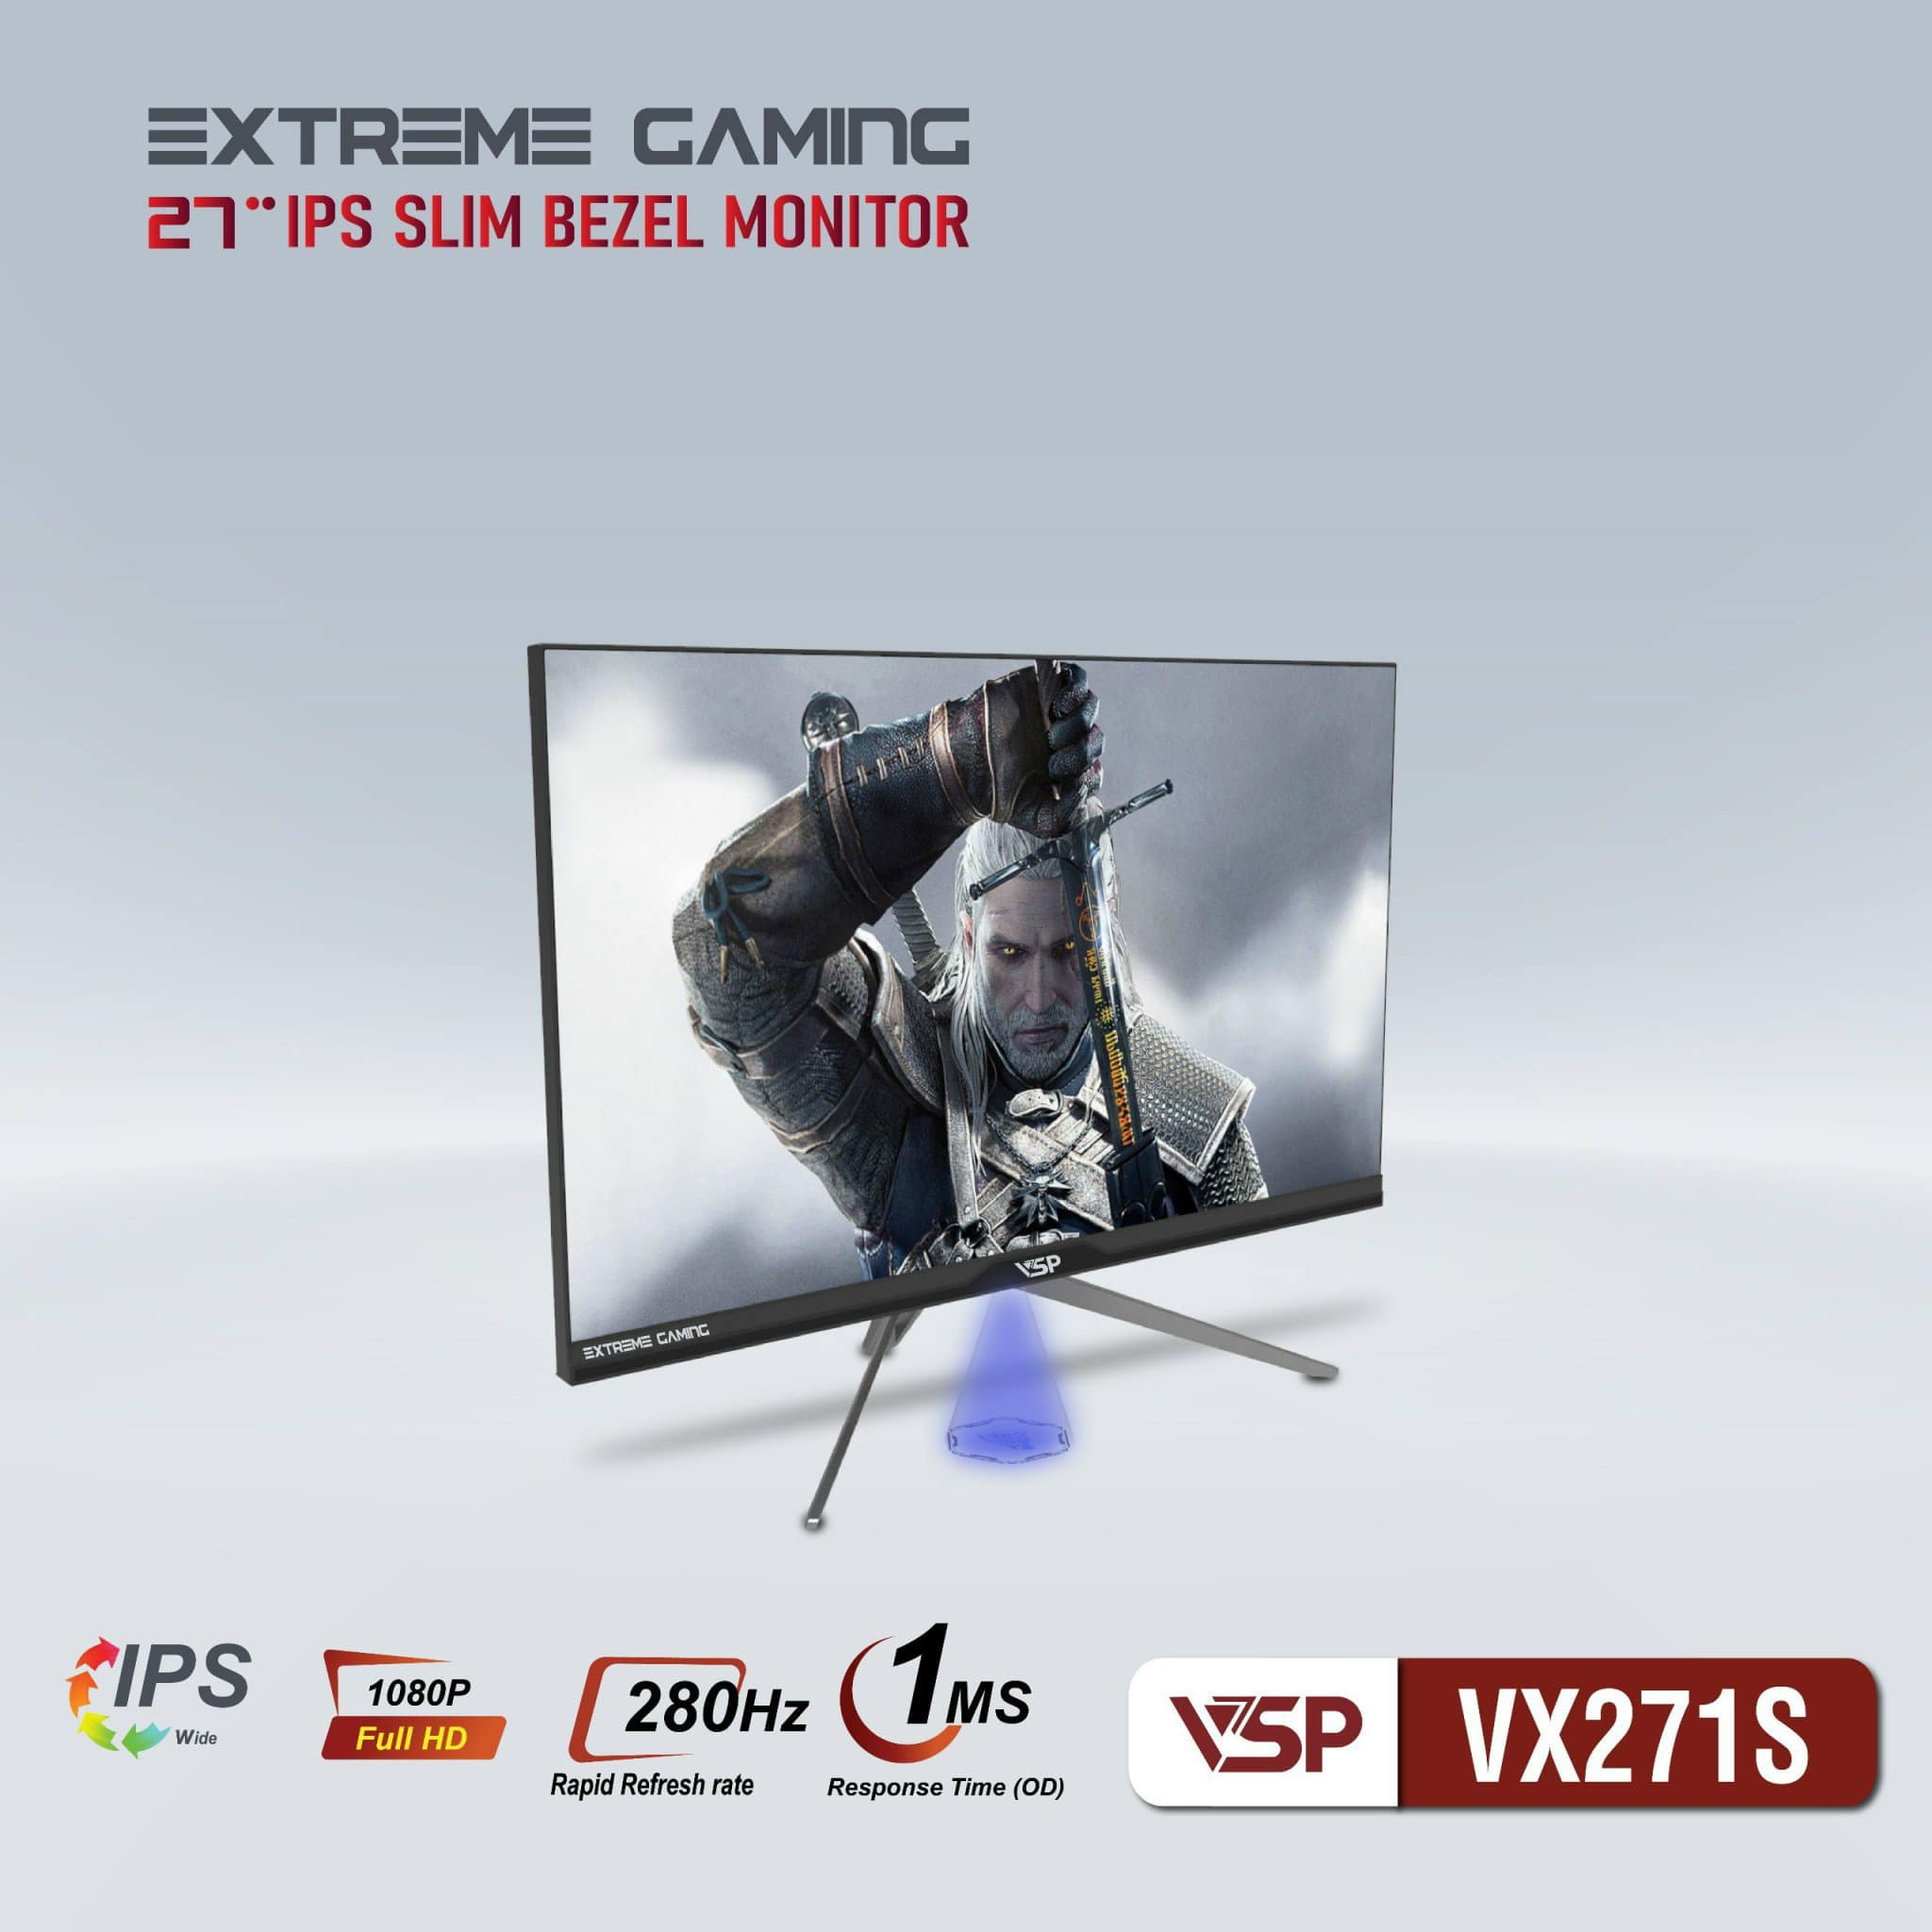 man-hinh-vsp-extreme-gaming-vx271s (1)